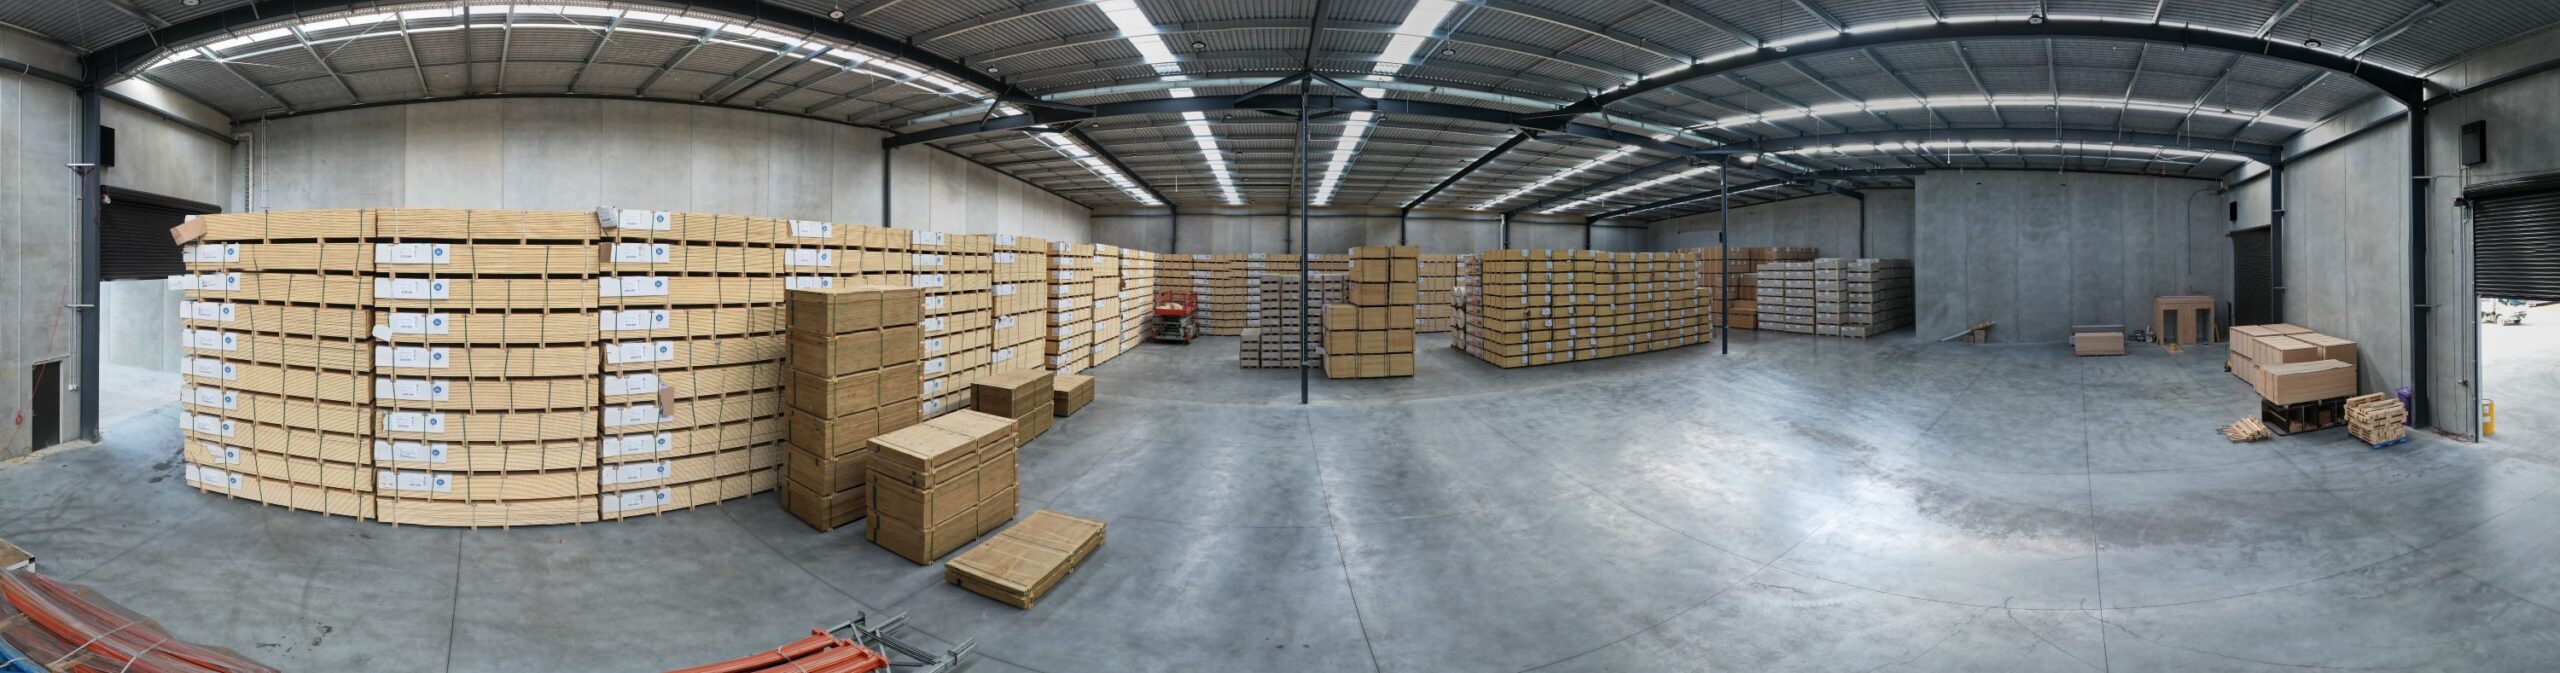 IBS Warehouse Storage Facility